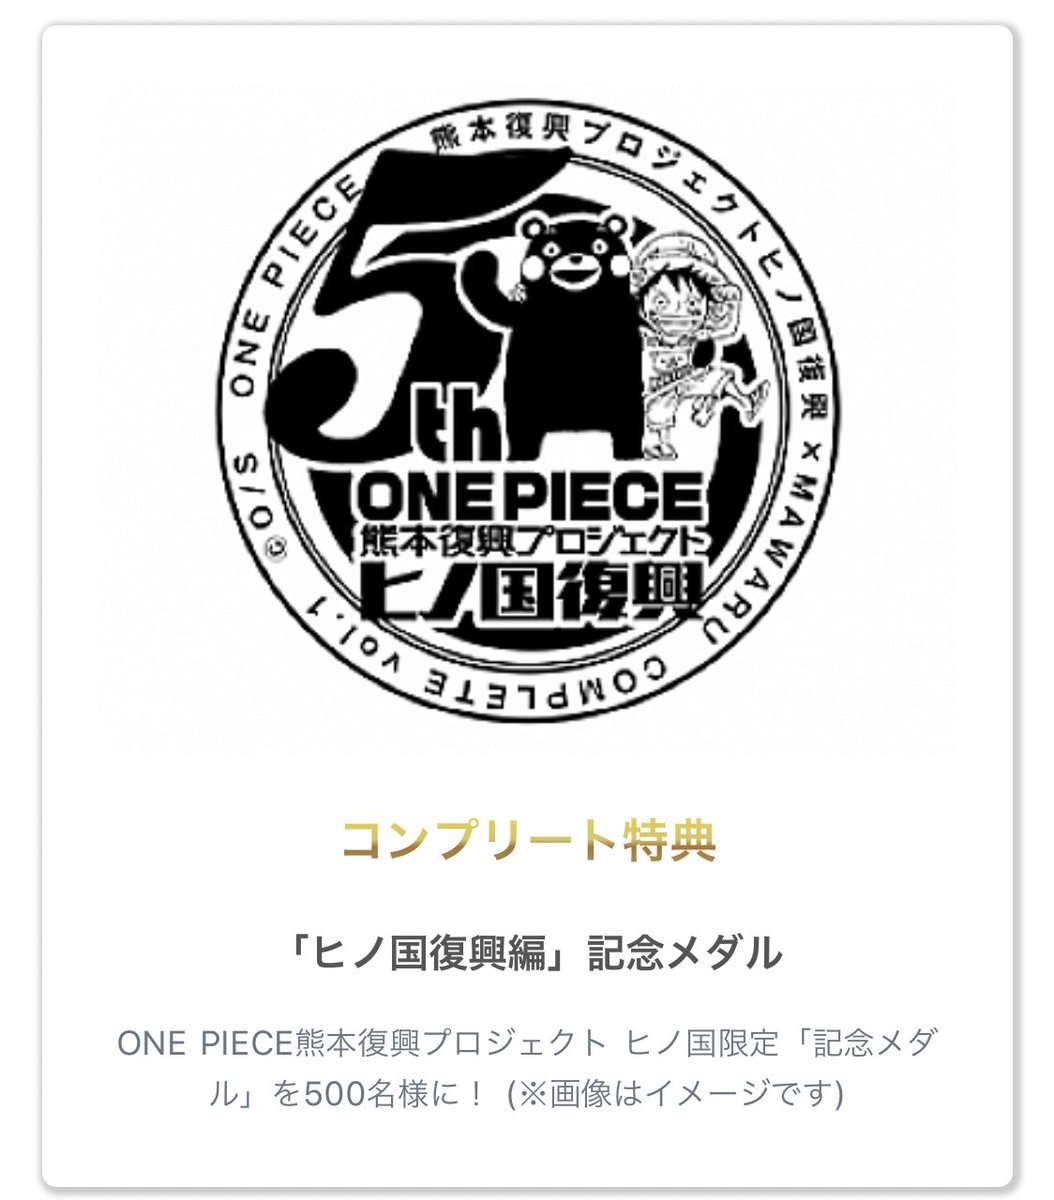 One Piece熊本復興プロジェクト 公式 One Piece熊本復興プロジェクト のデジタルスタンプラリーが本日からスタート ミッションをコンプリートすると ヒノ国復興編 記念メダルを500名様に 是非ゲットして下さいね 詳細はこちら T Co